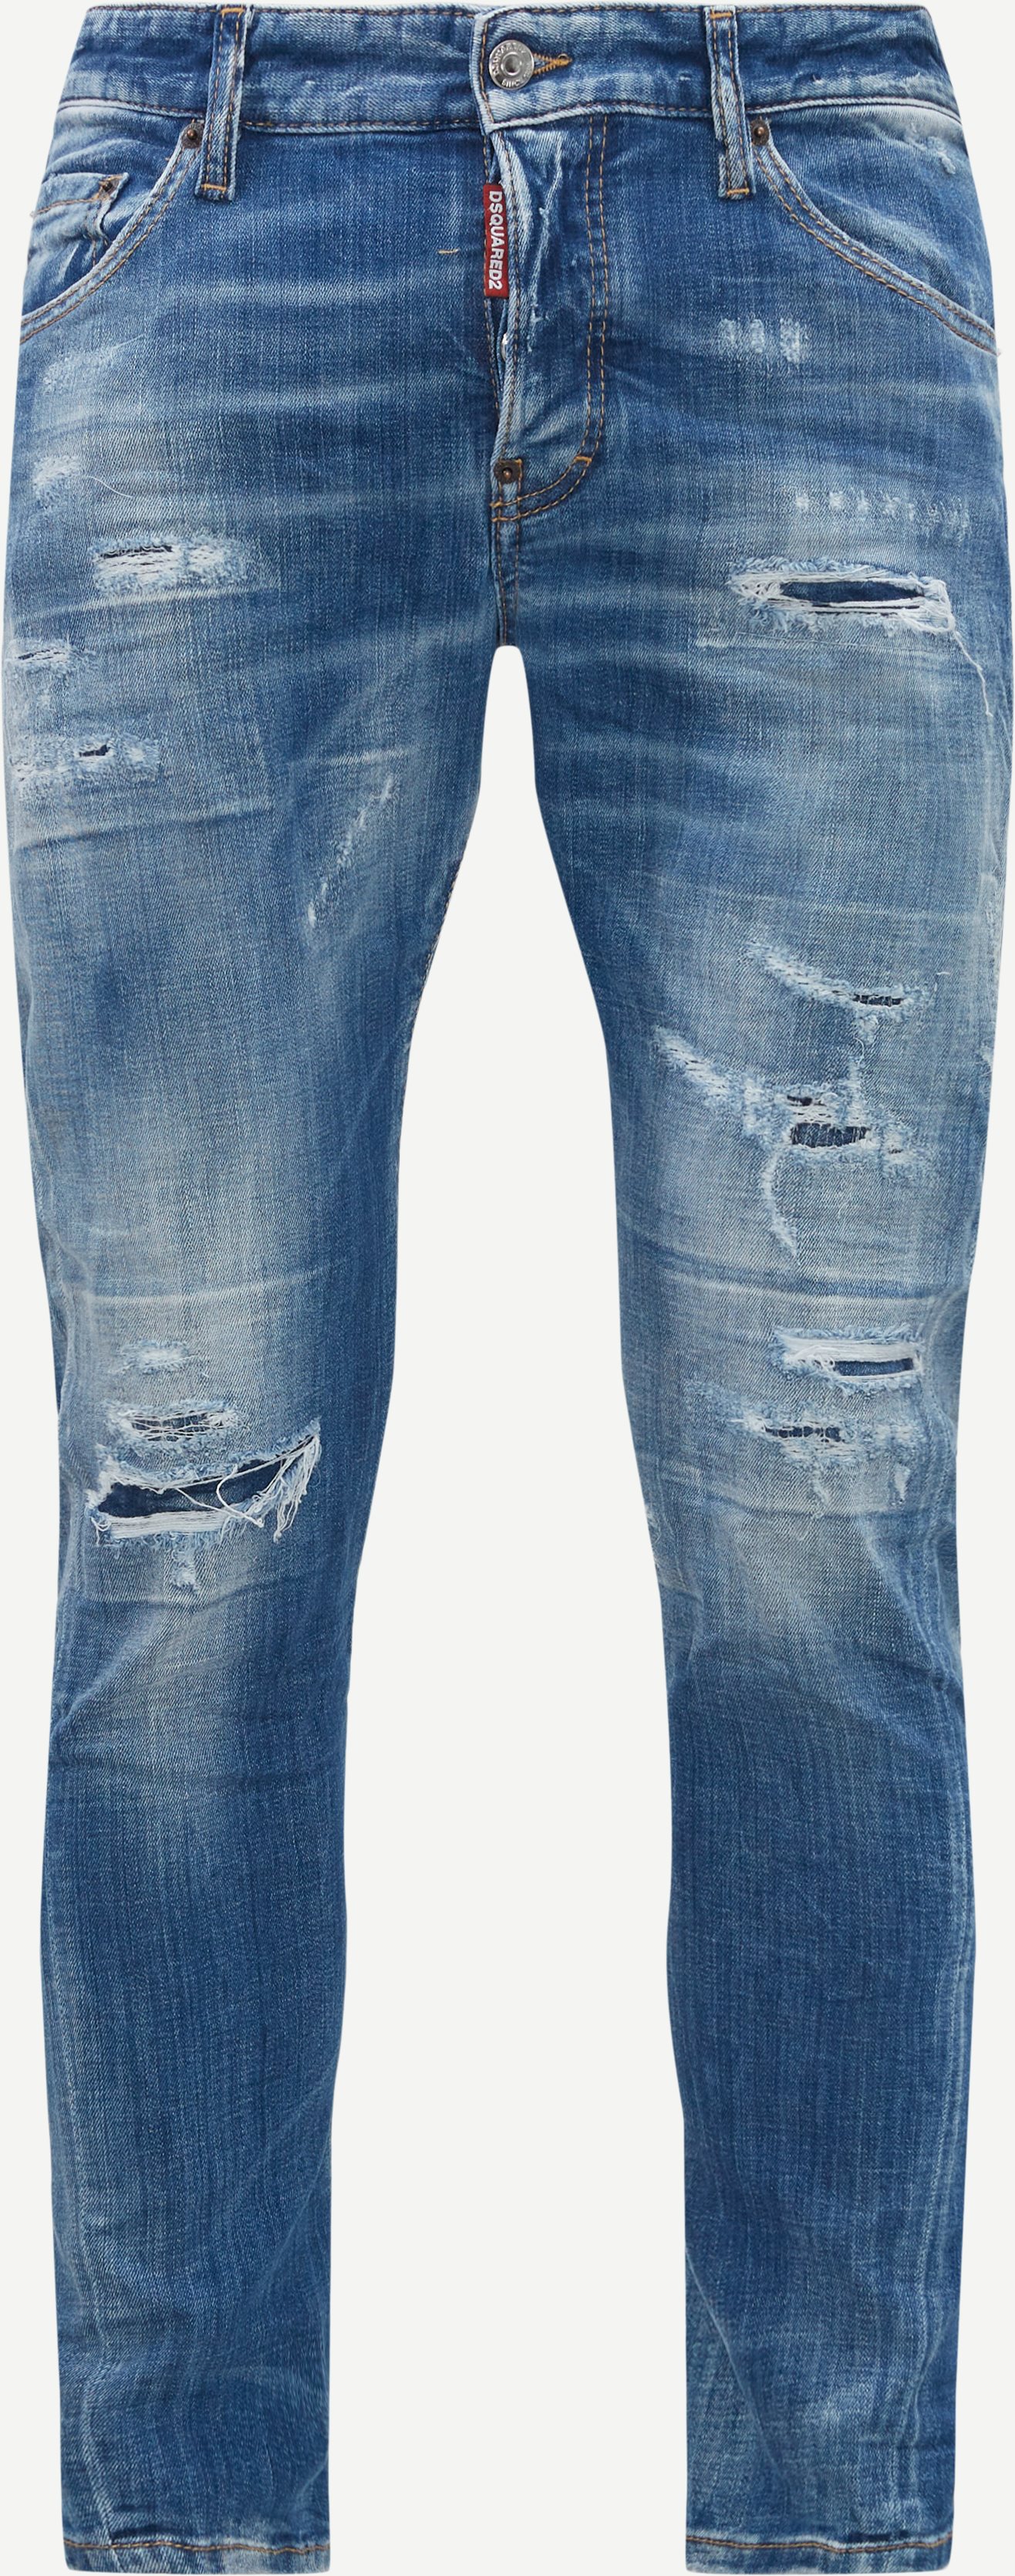 Jeans - Denim